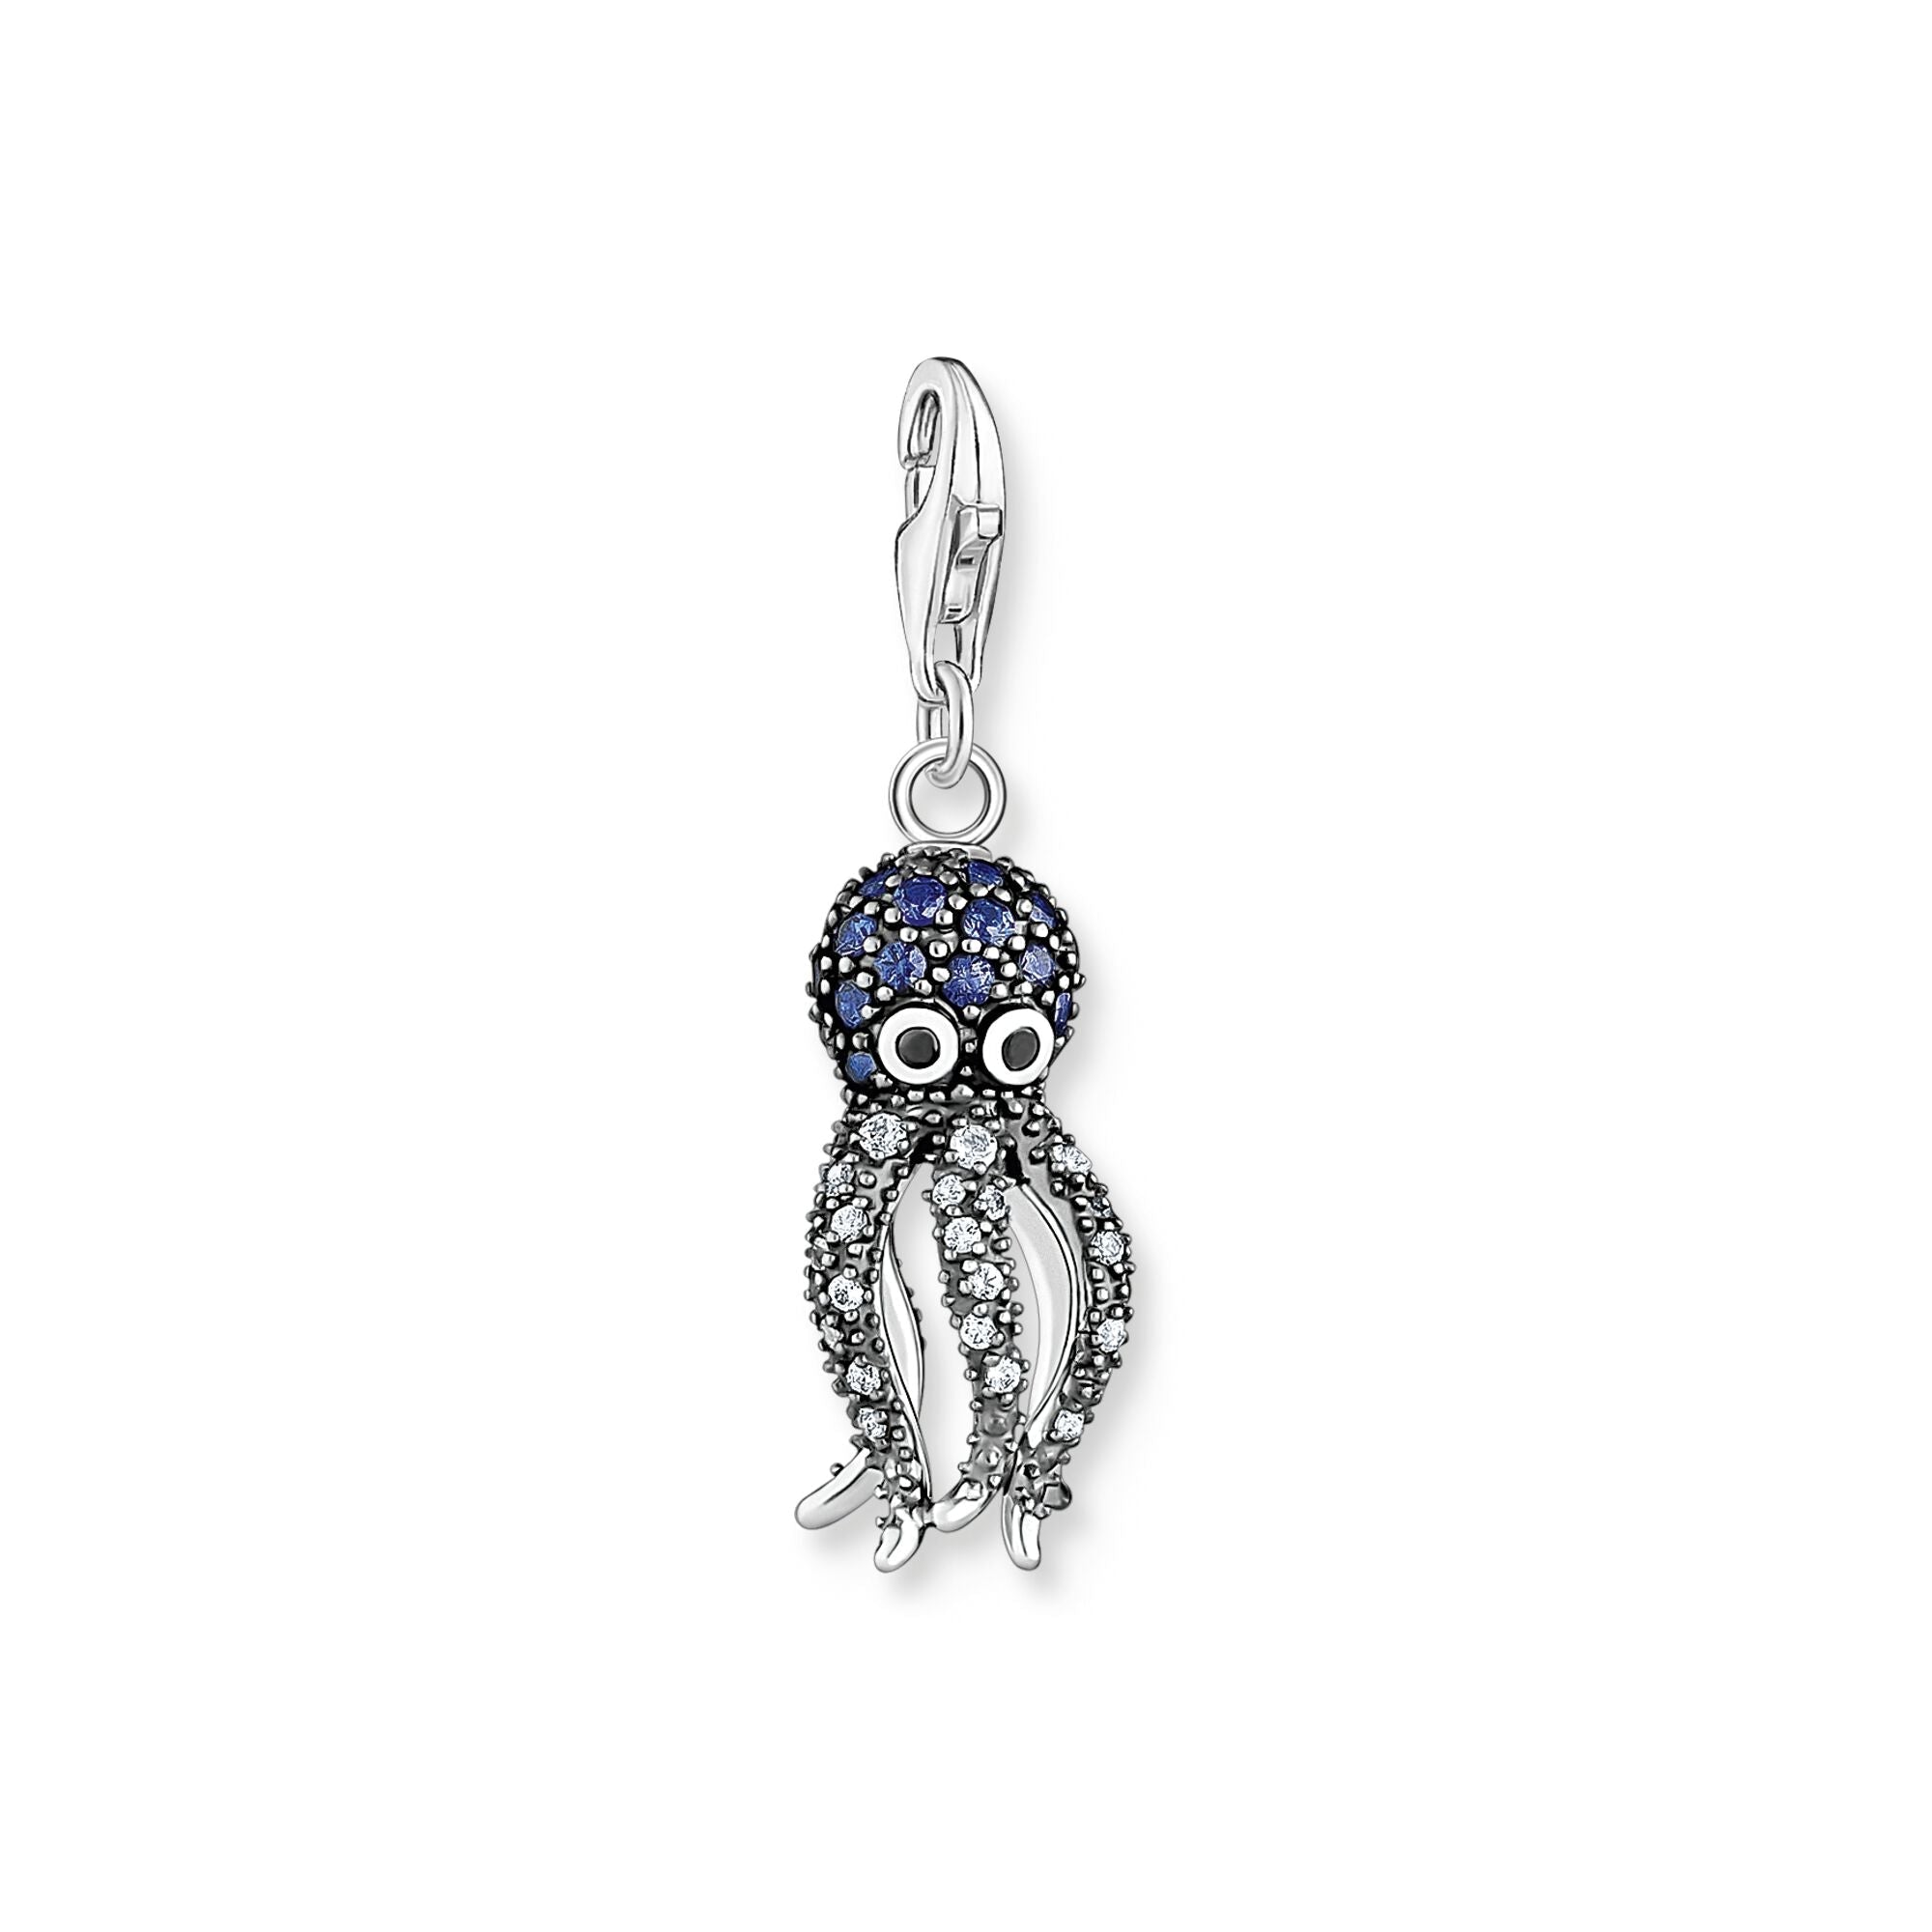 Thomas Sabo Charm Pendant Octopus with Blue Stones